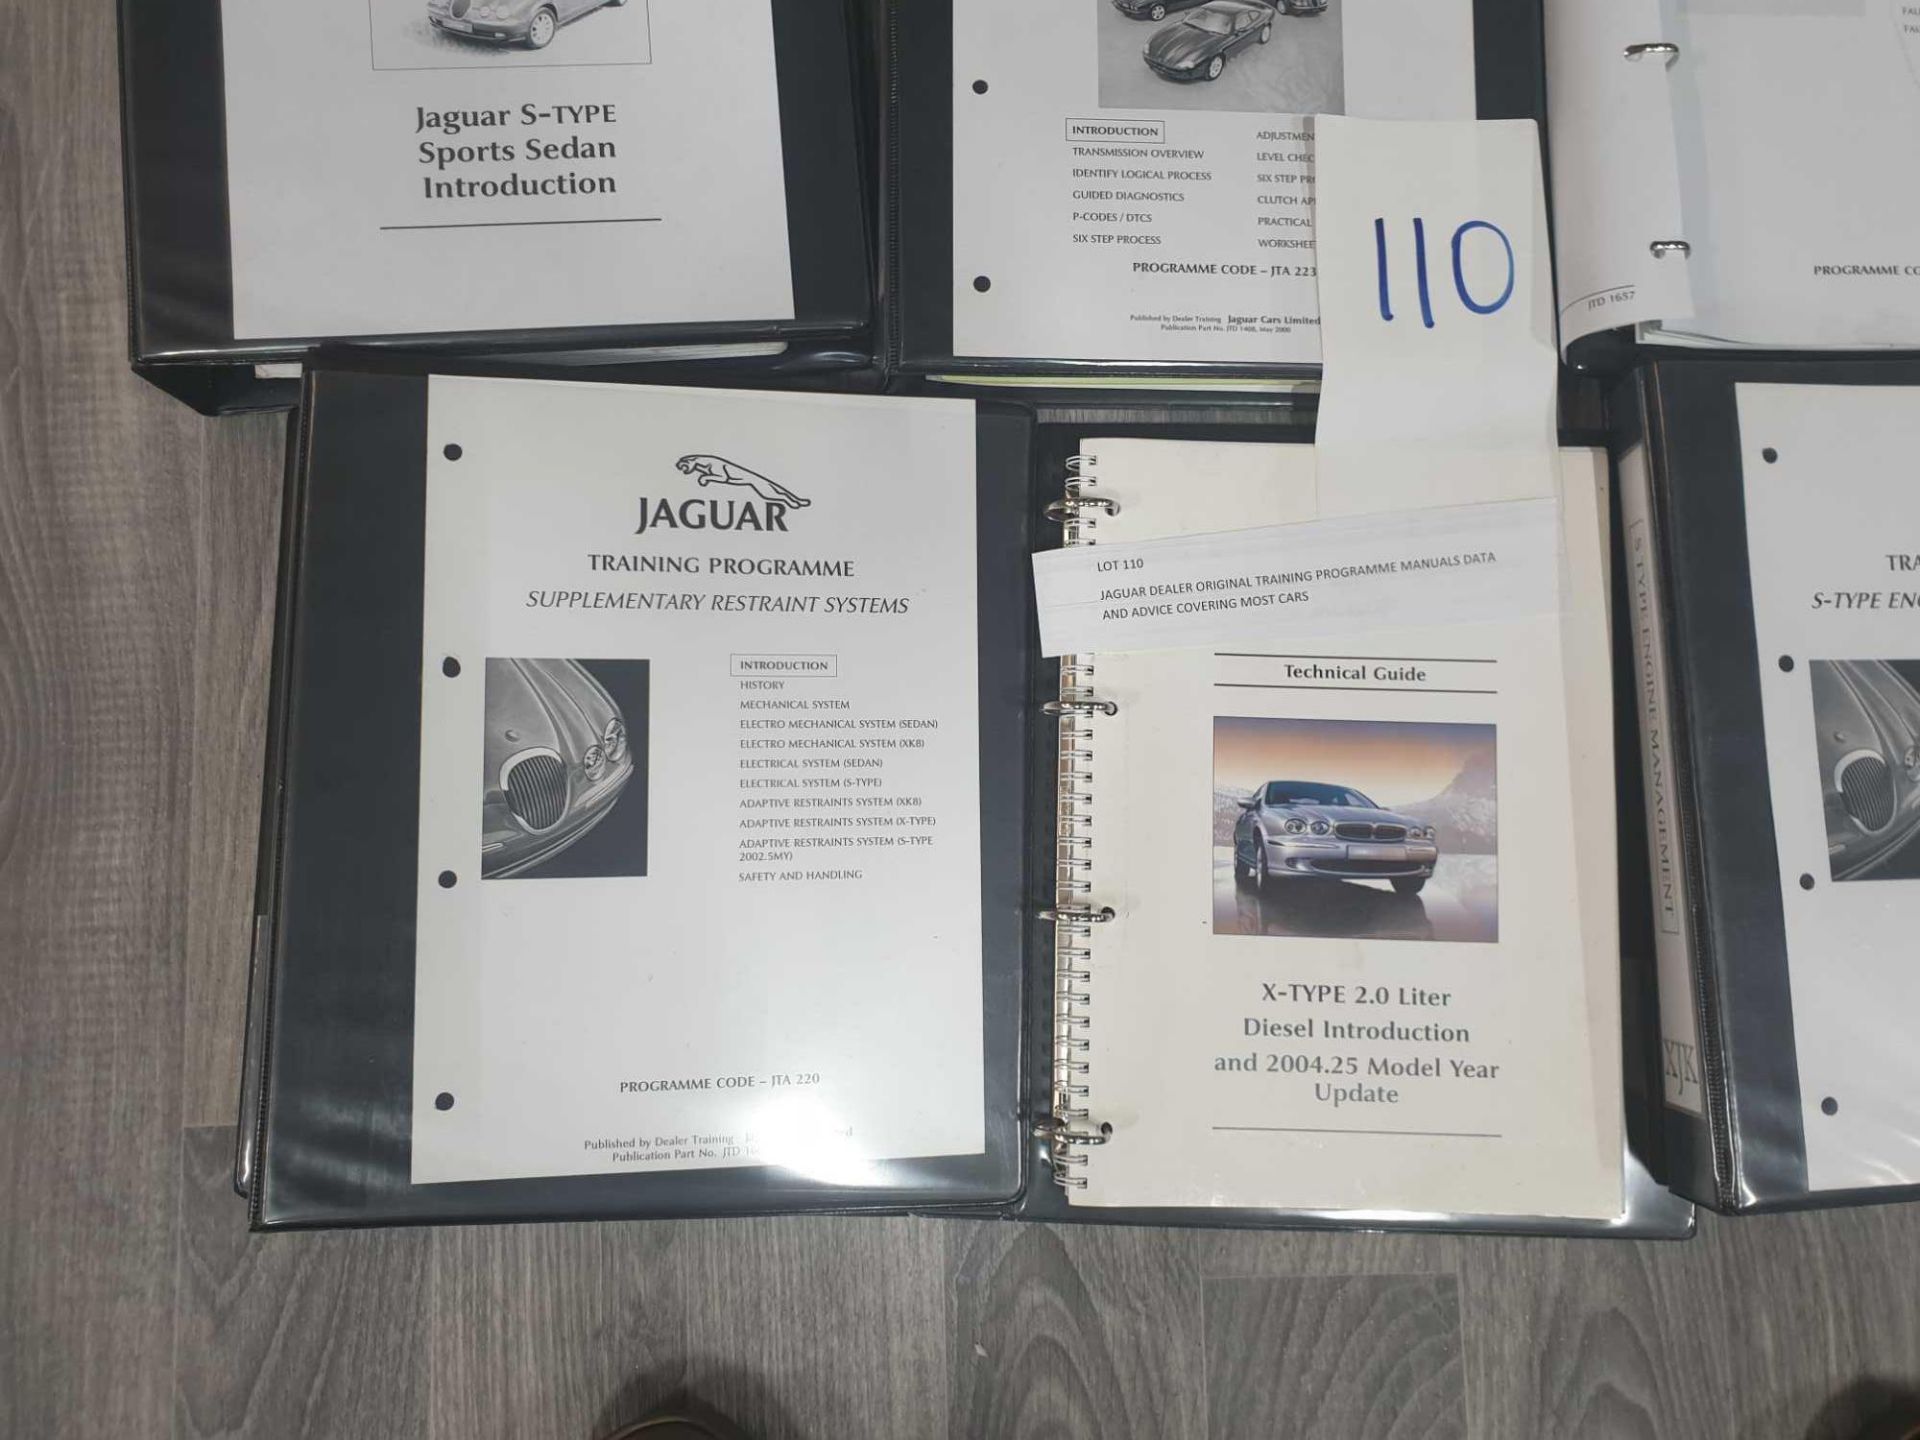 Jaguar dealer original training manuals data and advise covering most cores - Bild 3 aus 6